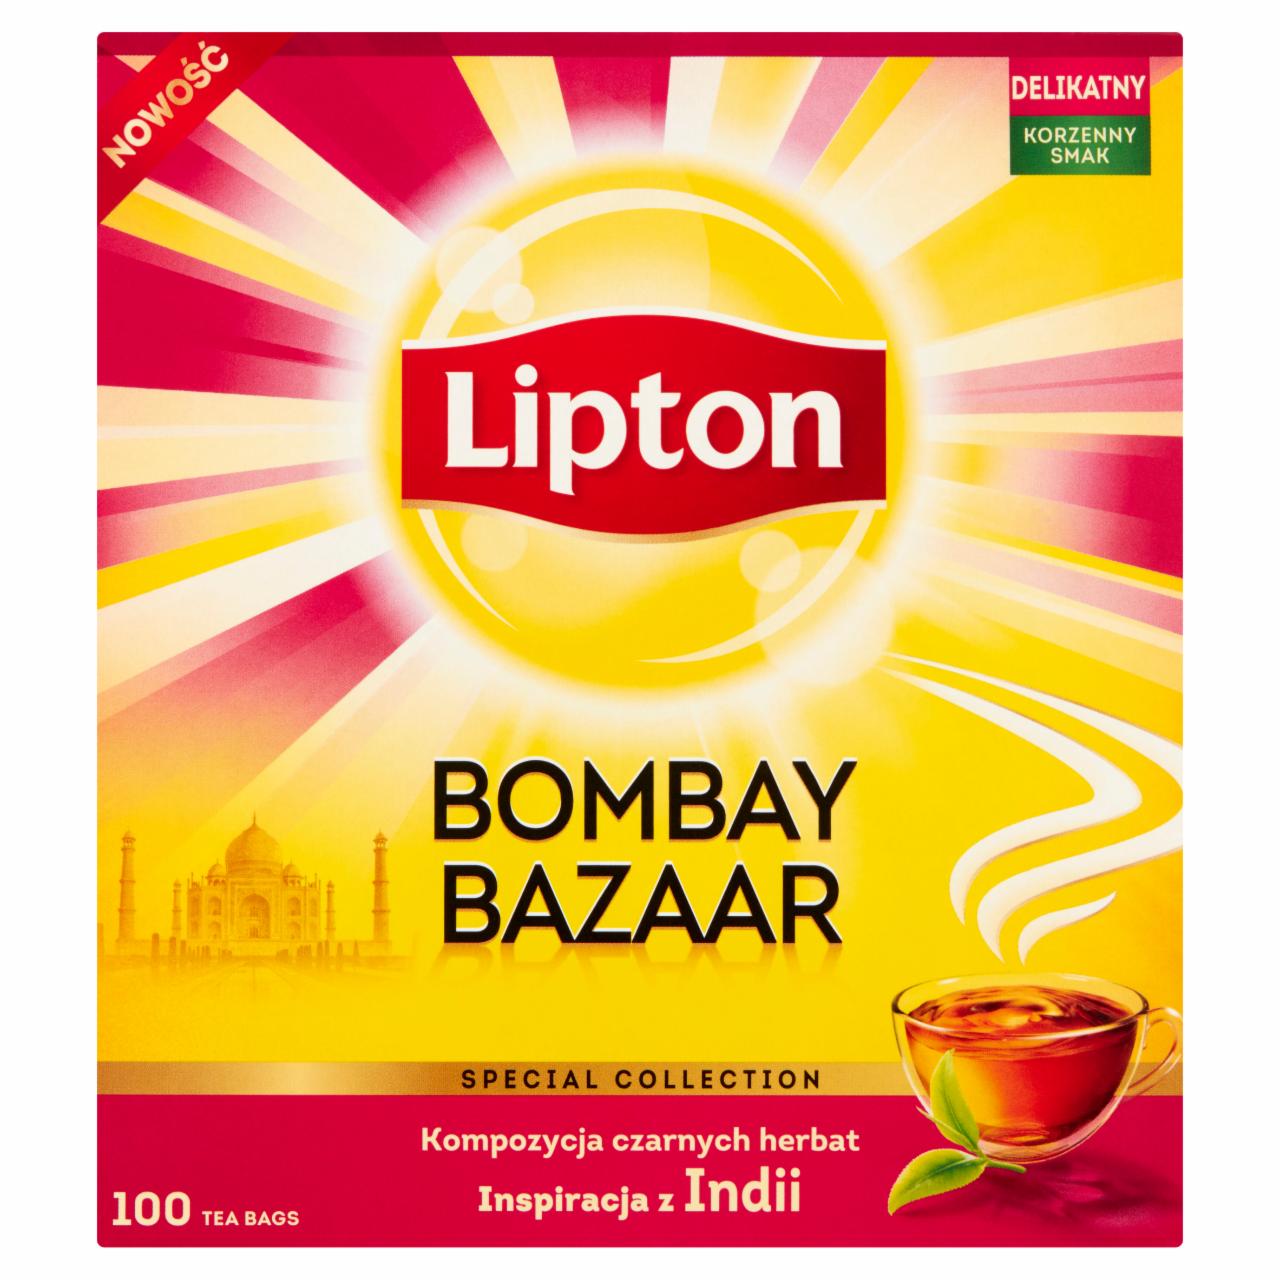 Zdjęcia - Lipton Bombay Bazaar Herbata czarna z naturalnym aromatem 180 g (100 torebek)